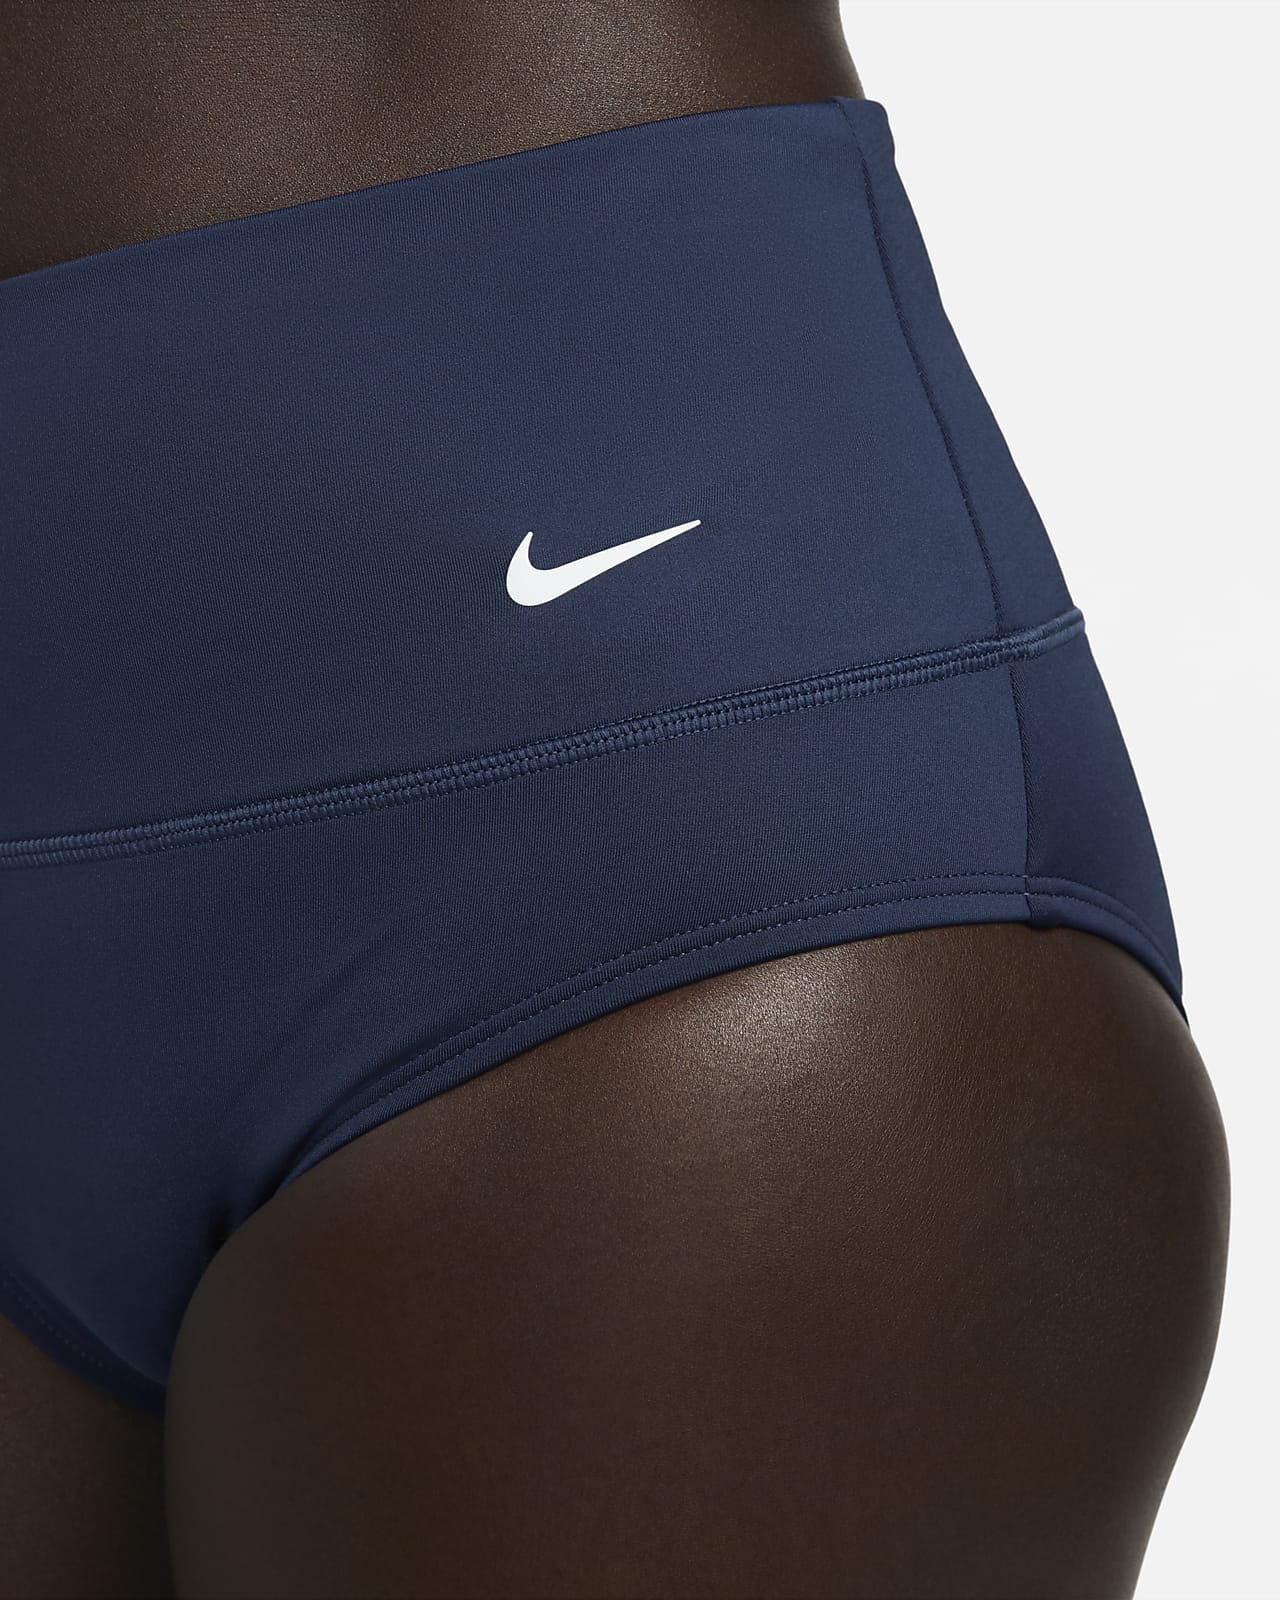 Women's Nike High Bottoms